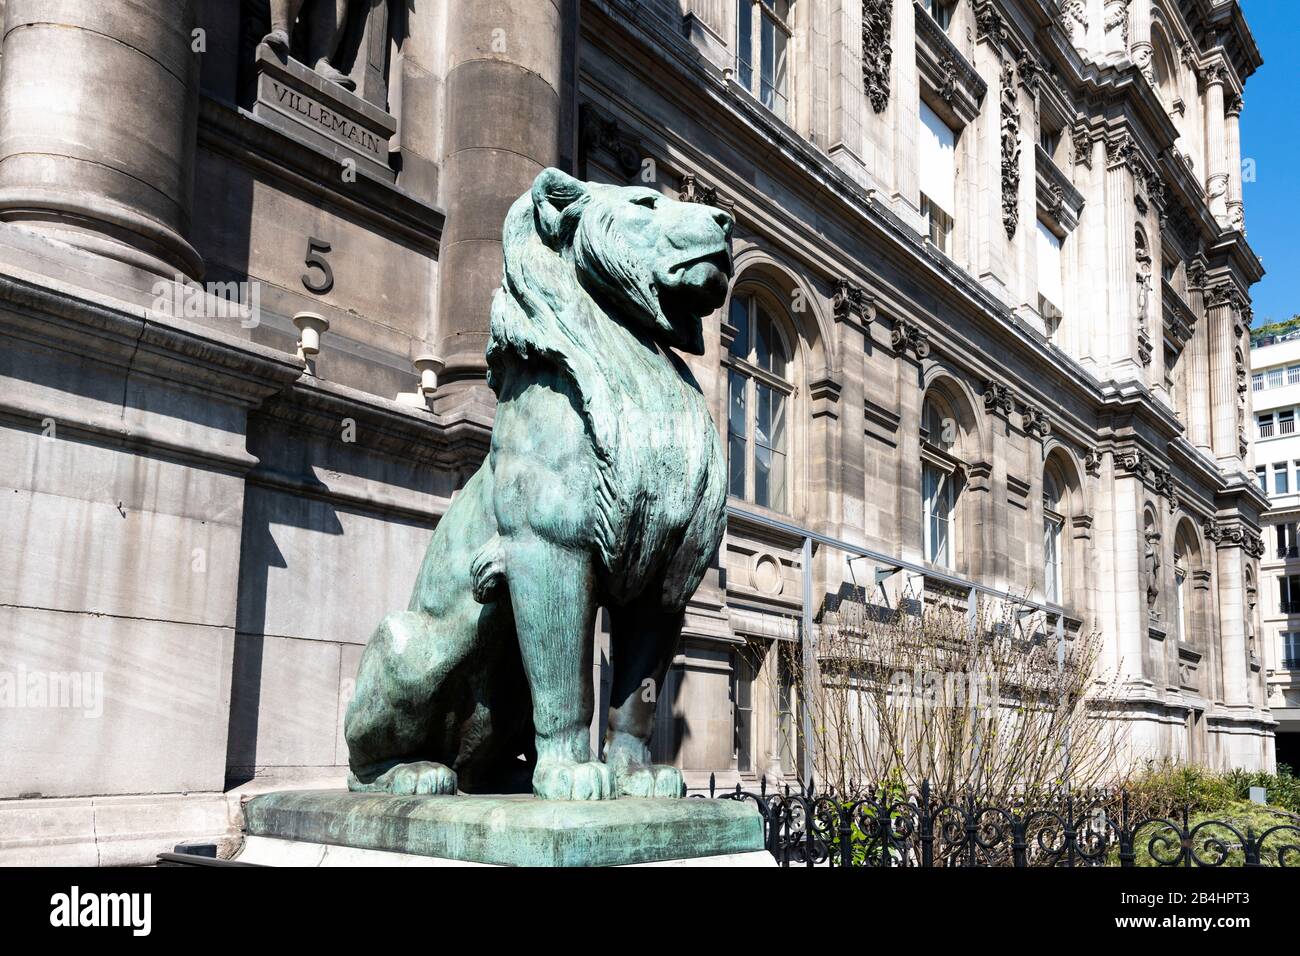 Ein sitzender Löwe vor dem berühmten Hotel de Ville, Paris, Frankreich, Europa Banque D'Images